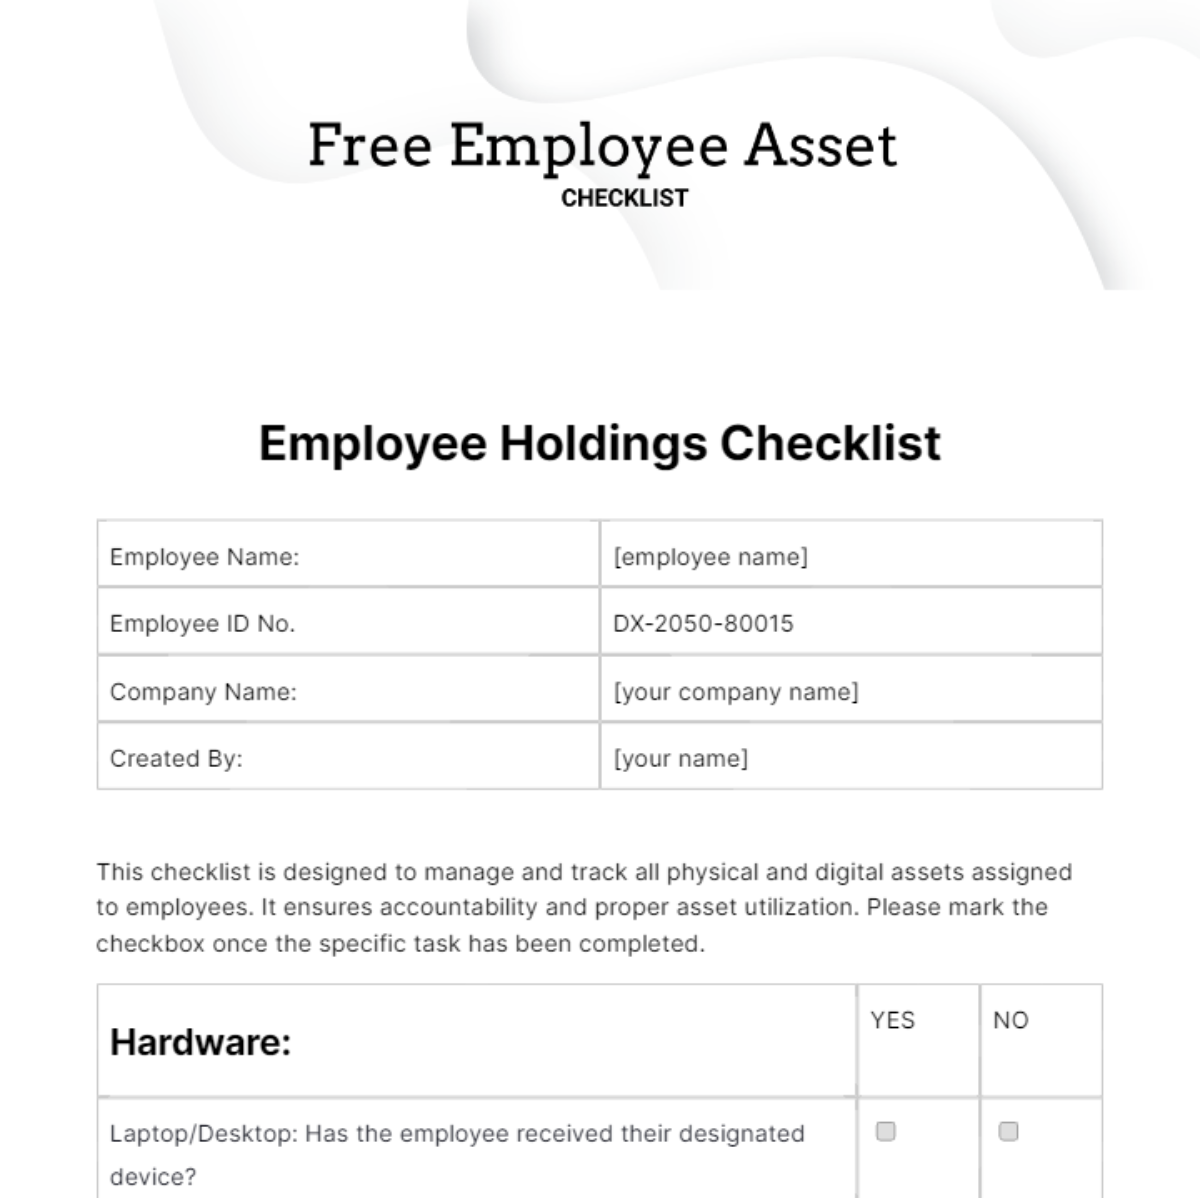 Free Employee Asset Checklist Template